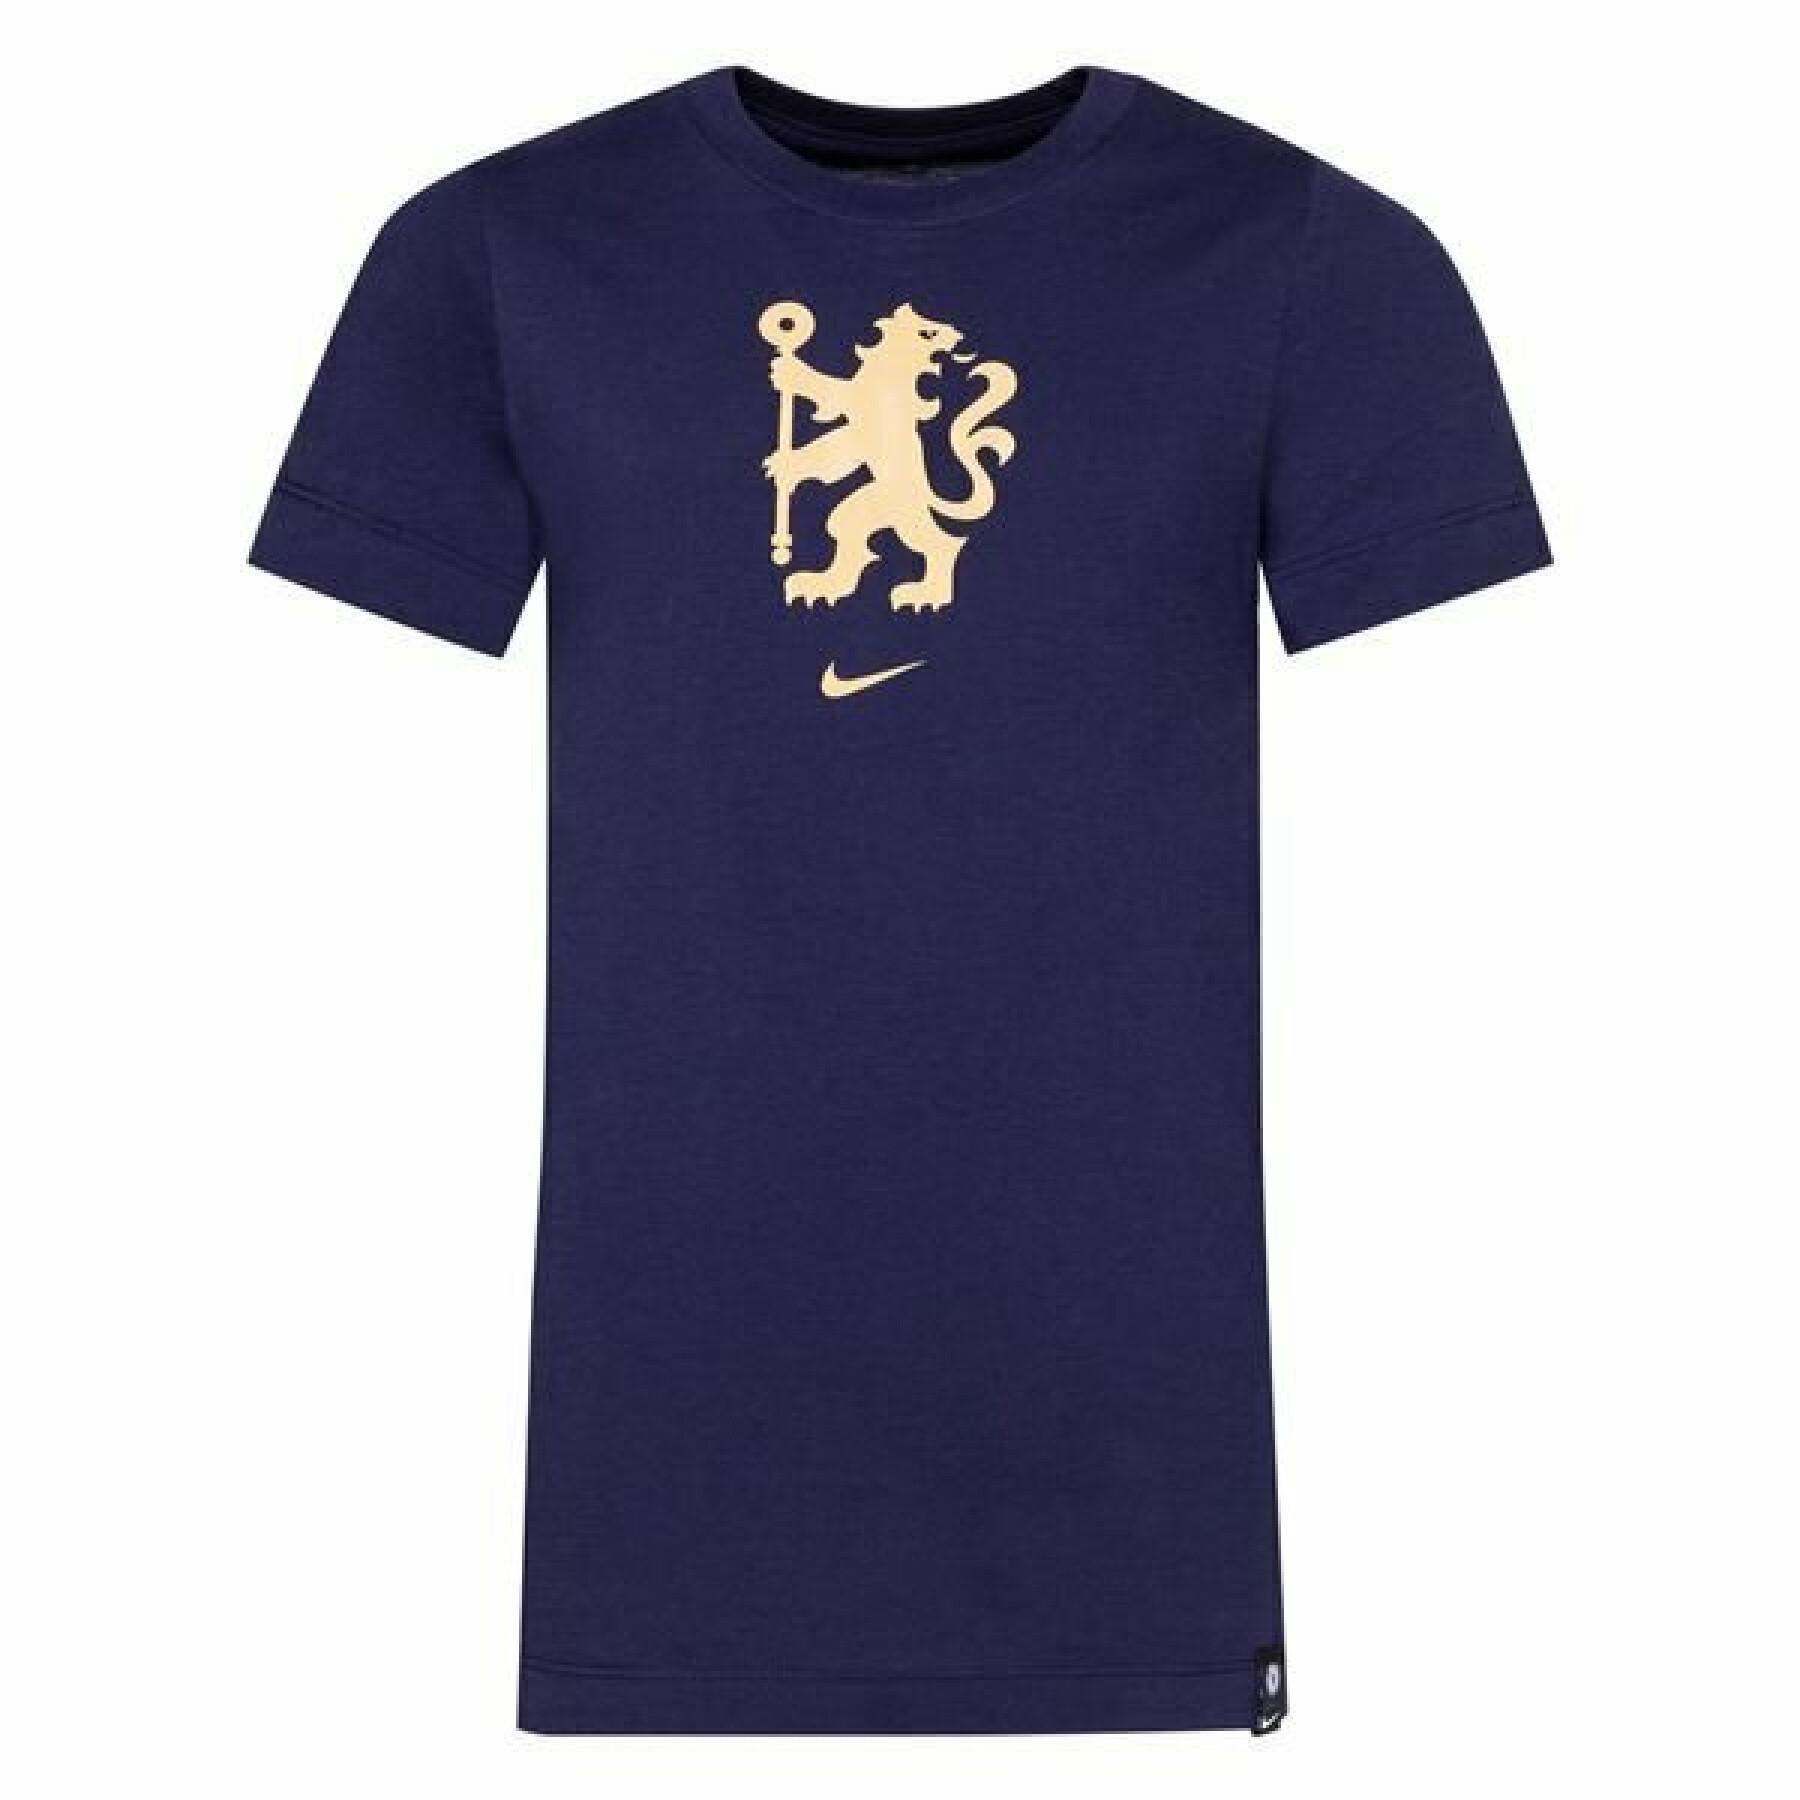 Child's T-shirt Chelsea 2021/22